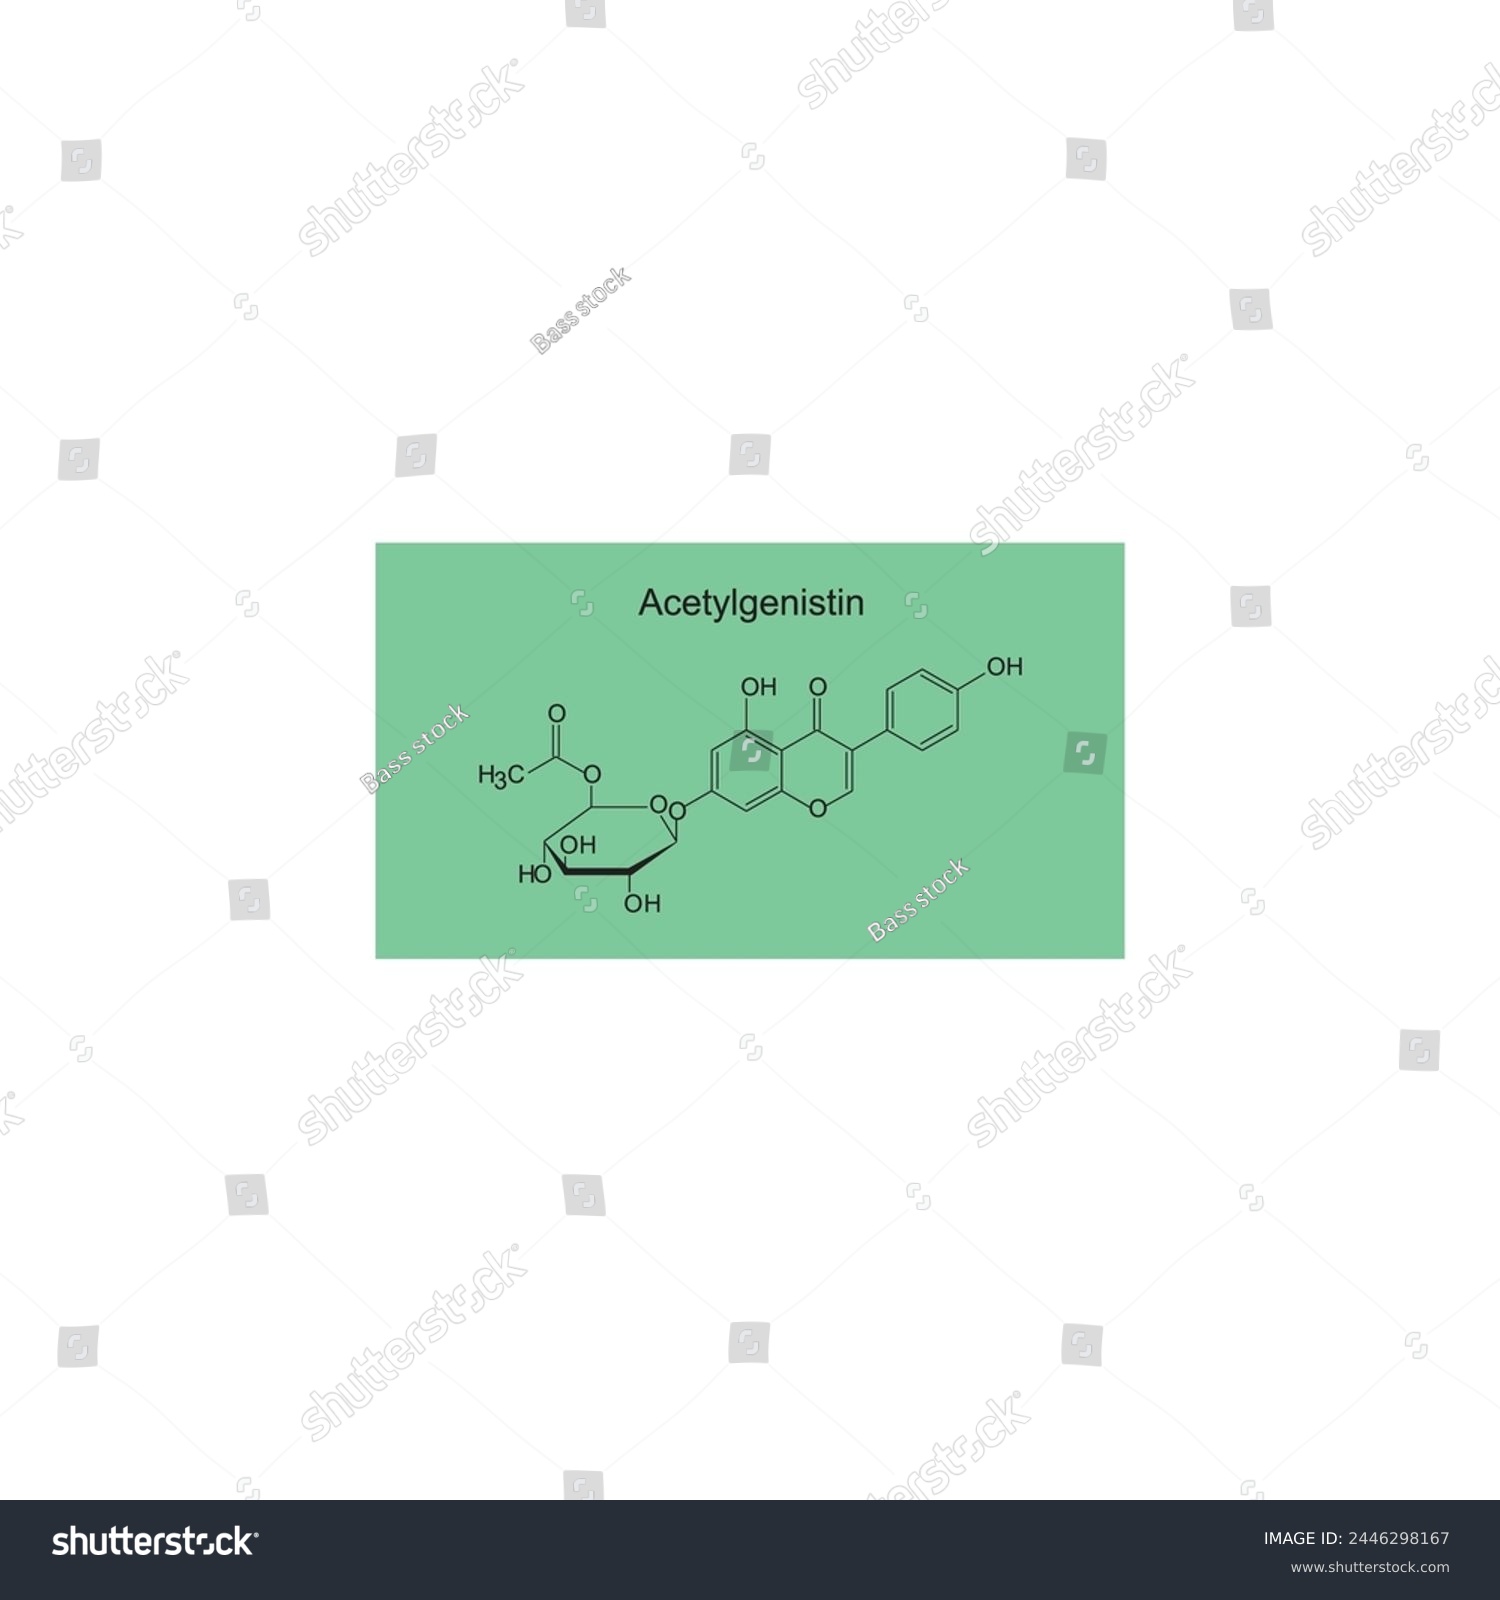 SVG of Acetylgenistin skeletal structure diagram.Isoflavanone compound molecule scientific illustration on green background. svg